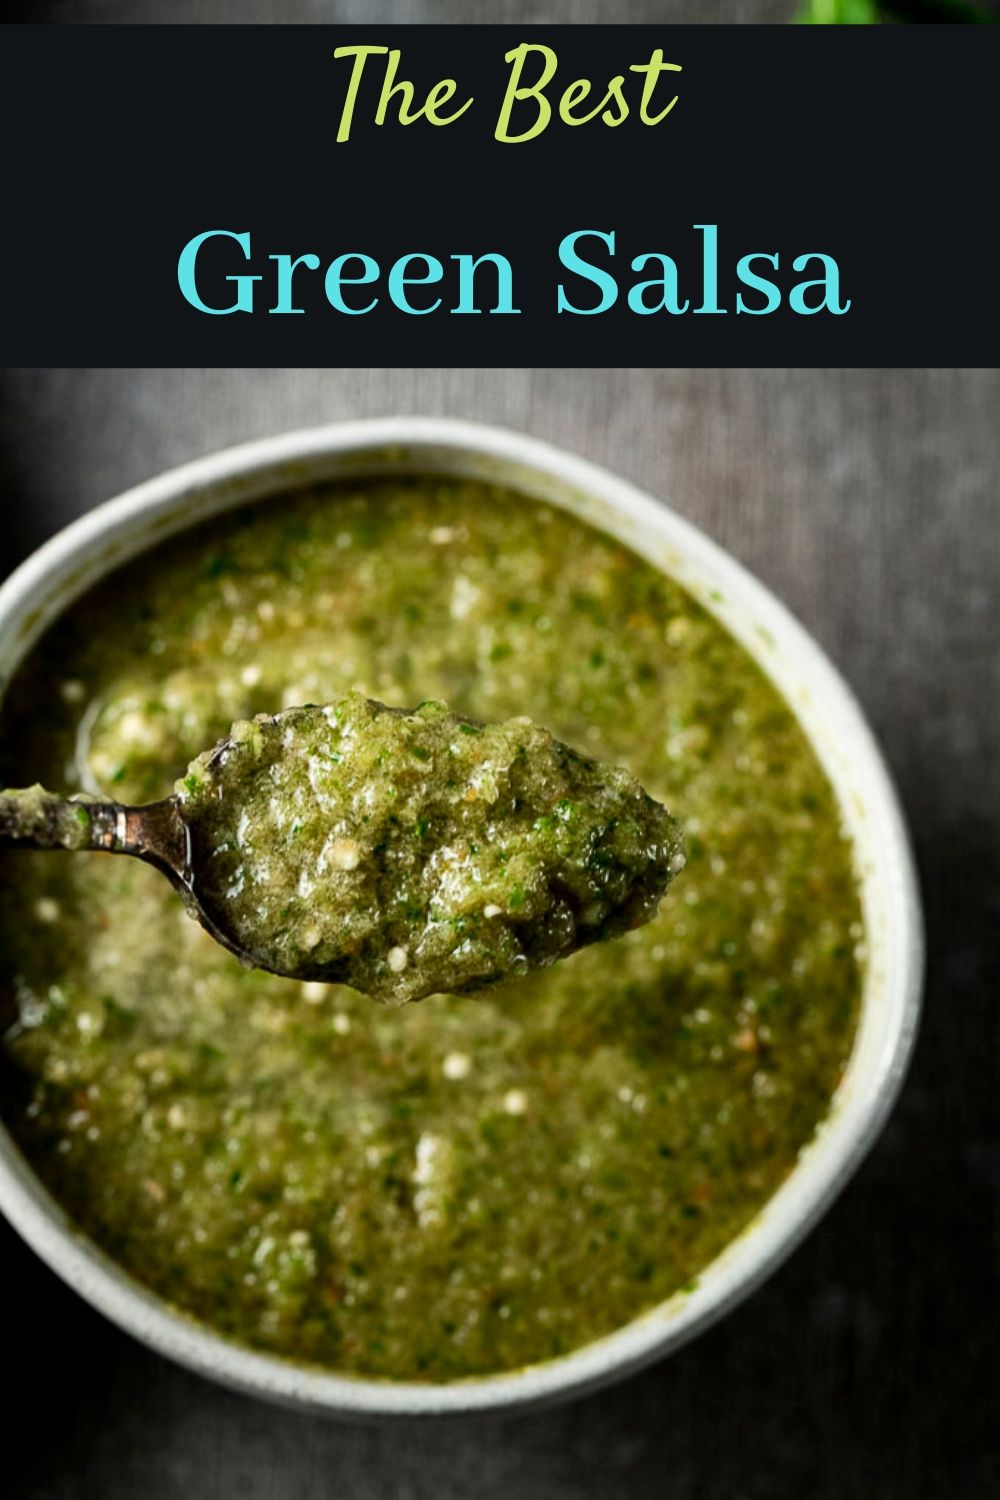 The Best Green Salsa Recipe (Tomatillo Salsa)